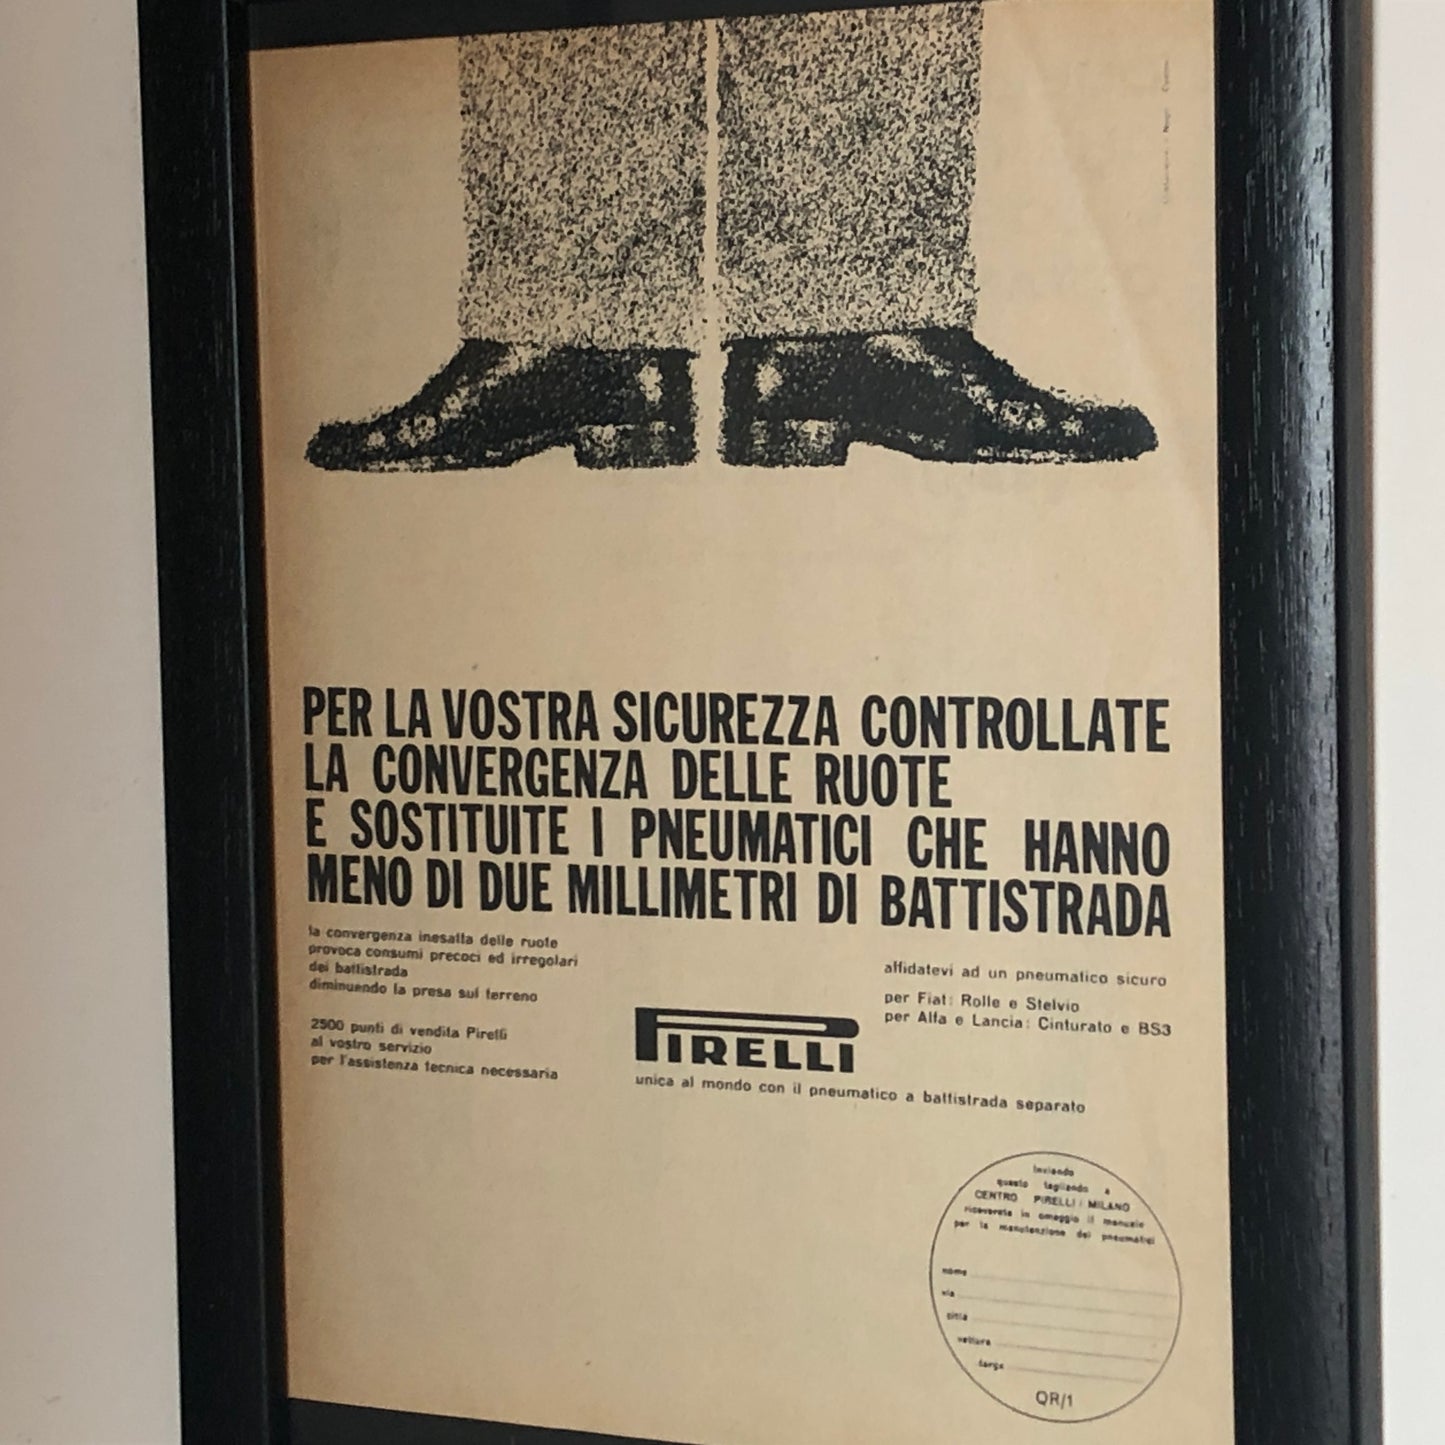 Pirelli, Advertising Year 1960 Pirelli Road Safety